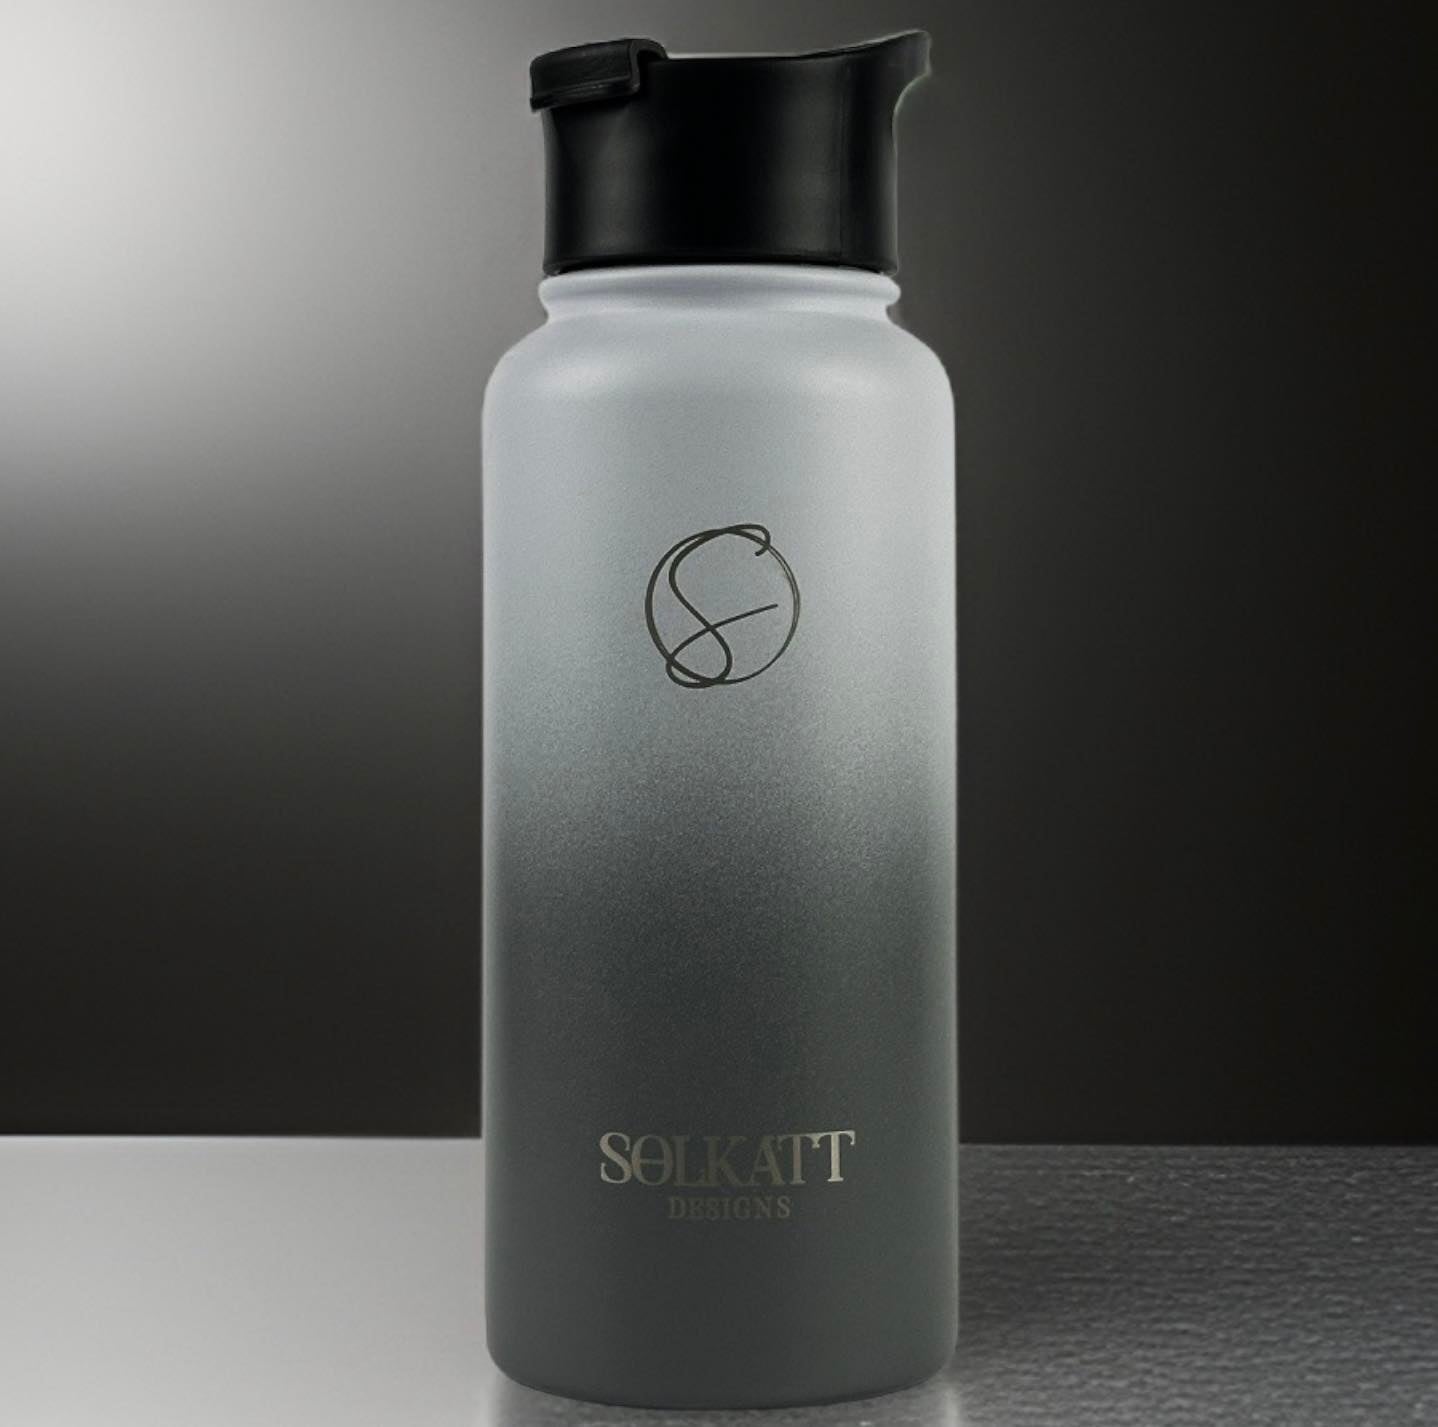 Misty Grey 950ml / 32oz Stainless Steel Insulated Drink Bottle - Solkatt Designs 